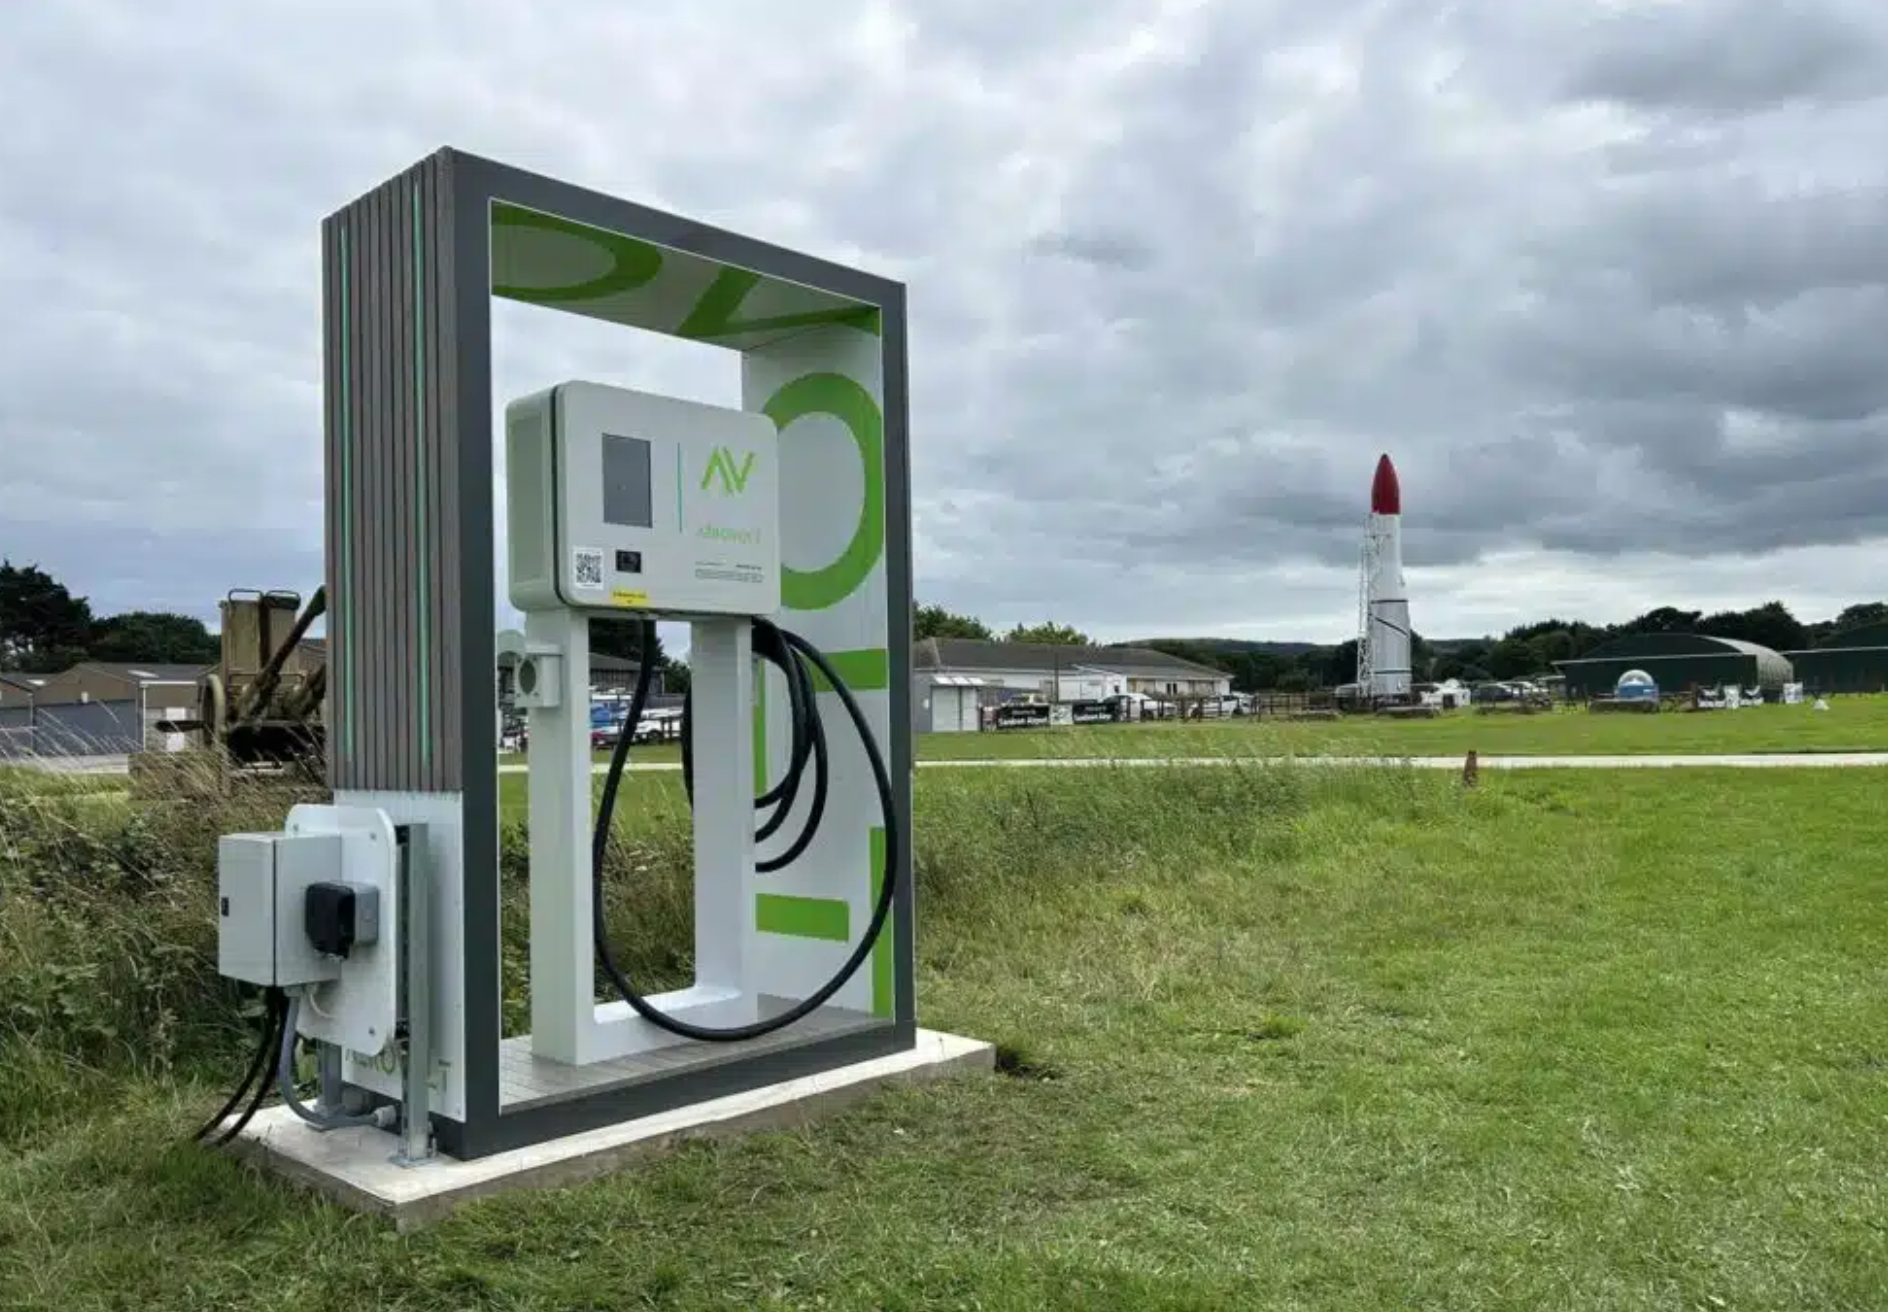 AeroVolt's smart charging infrastructure